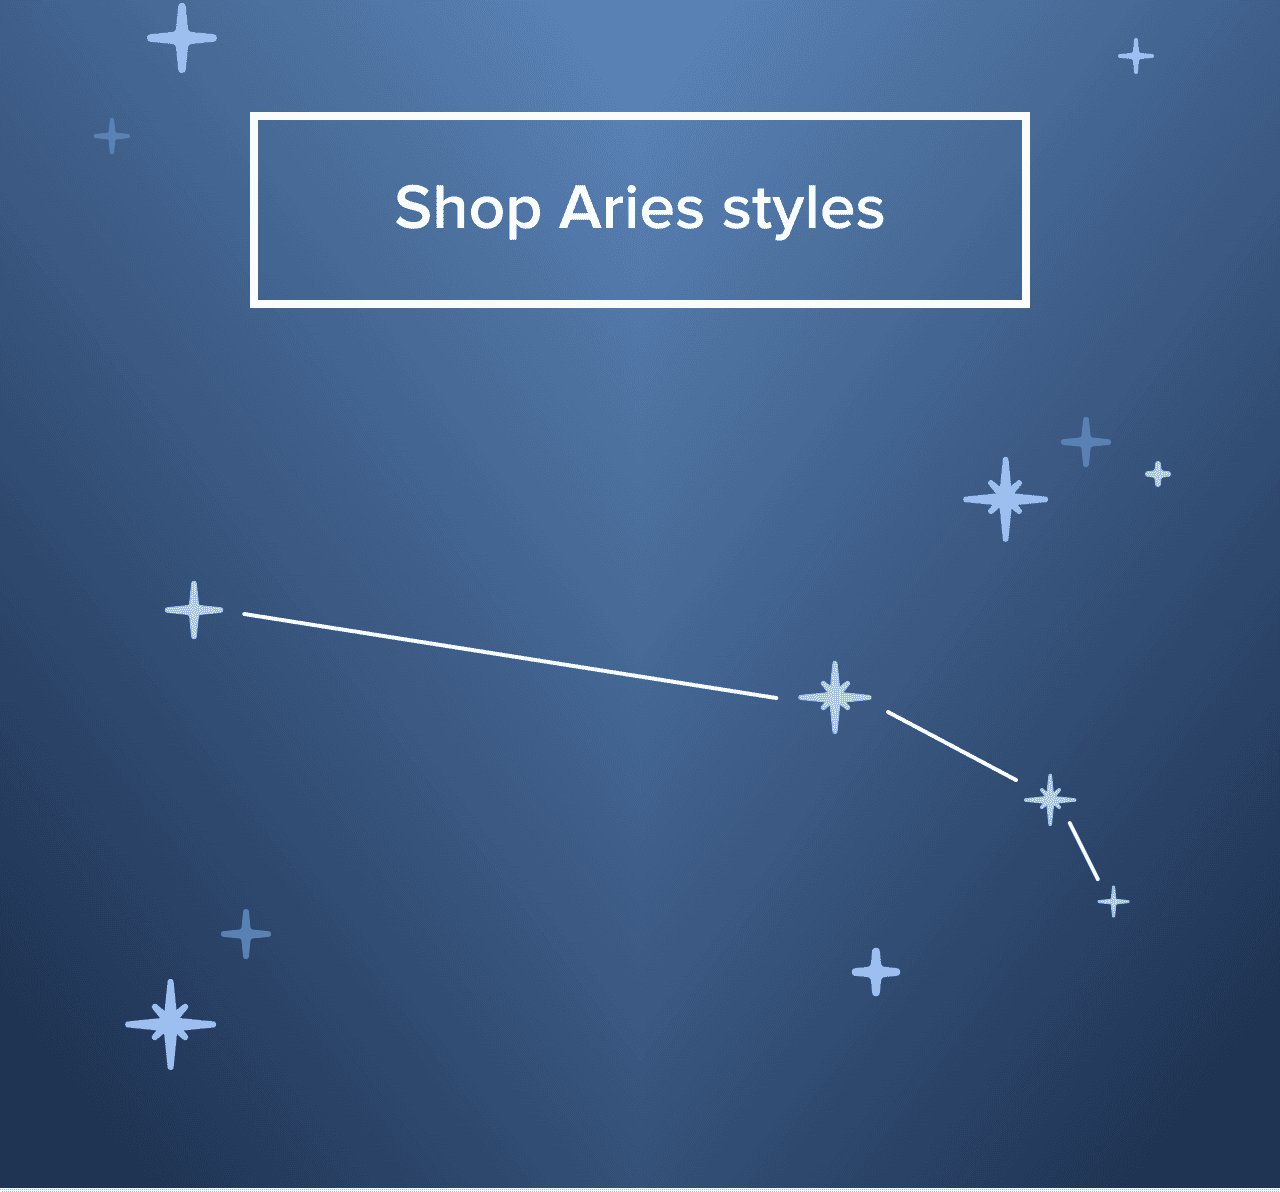 Shop Aries styles